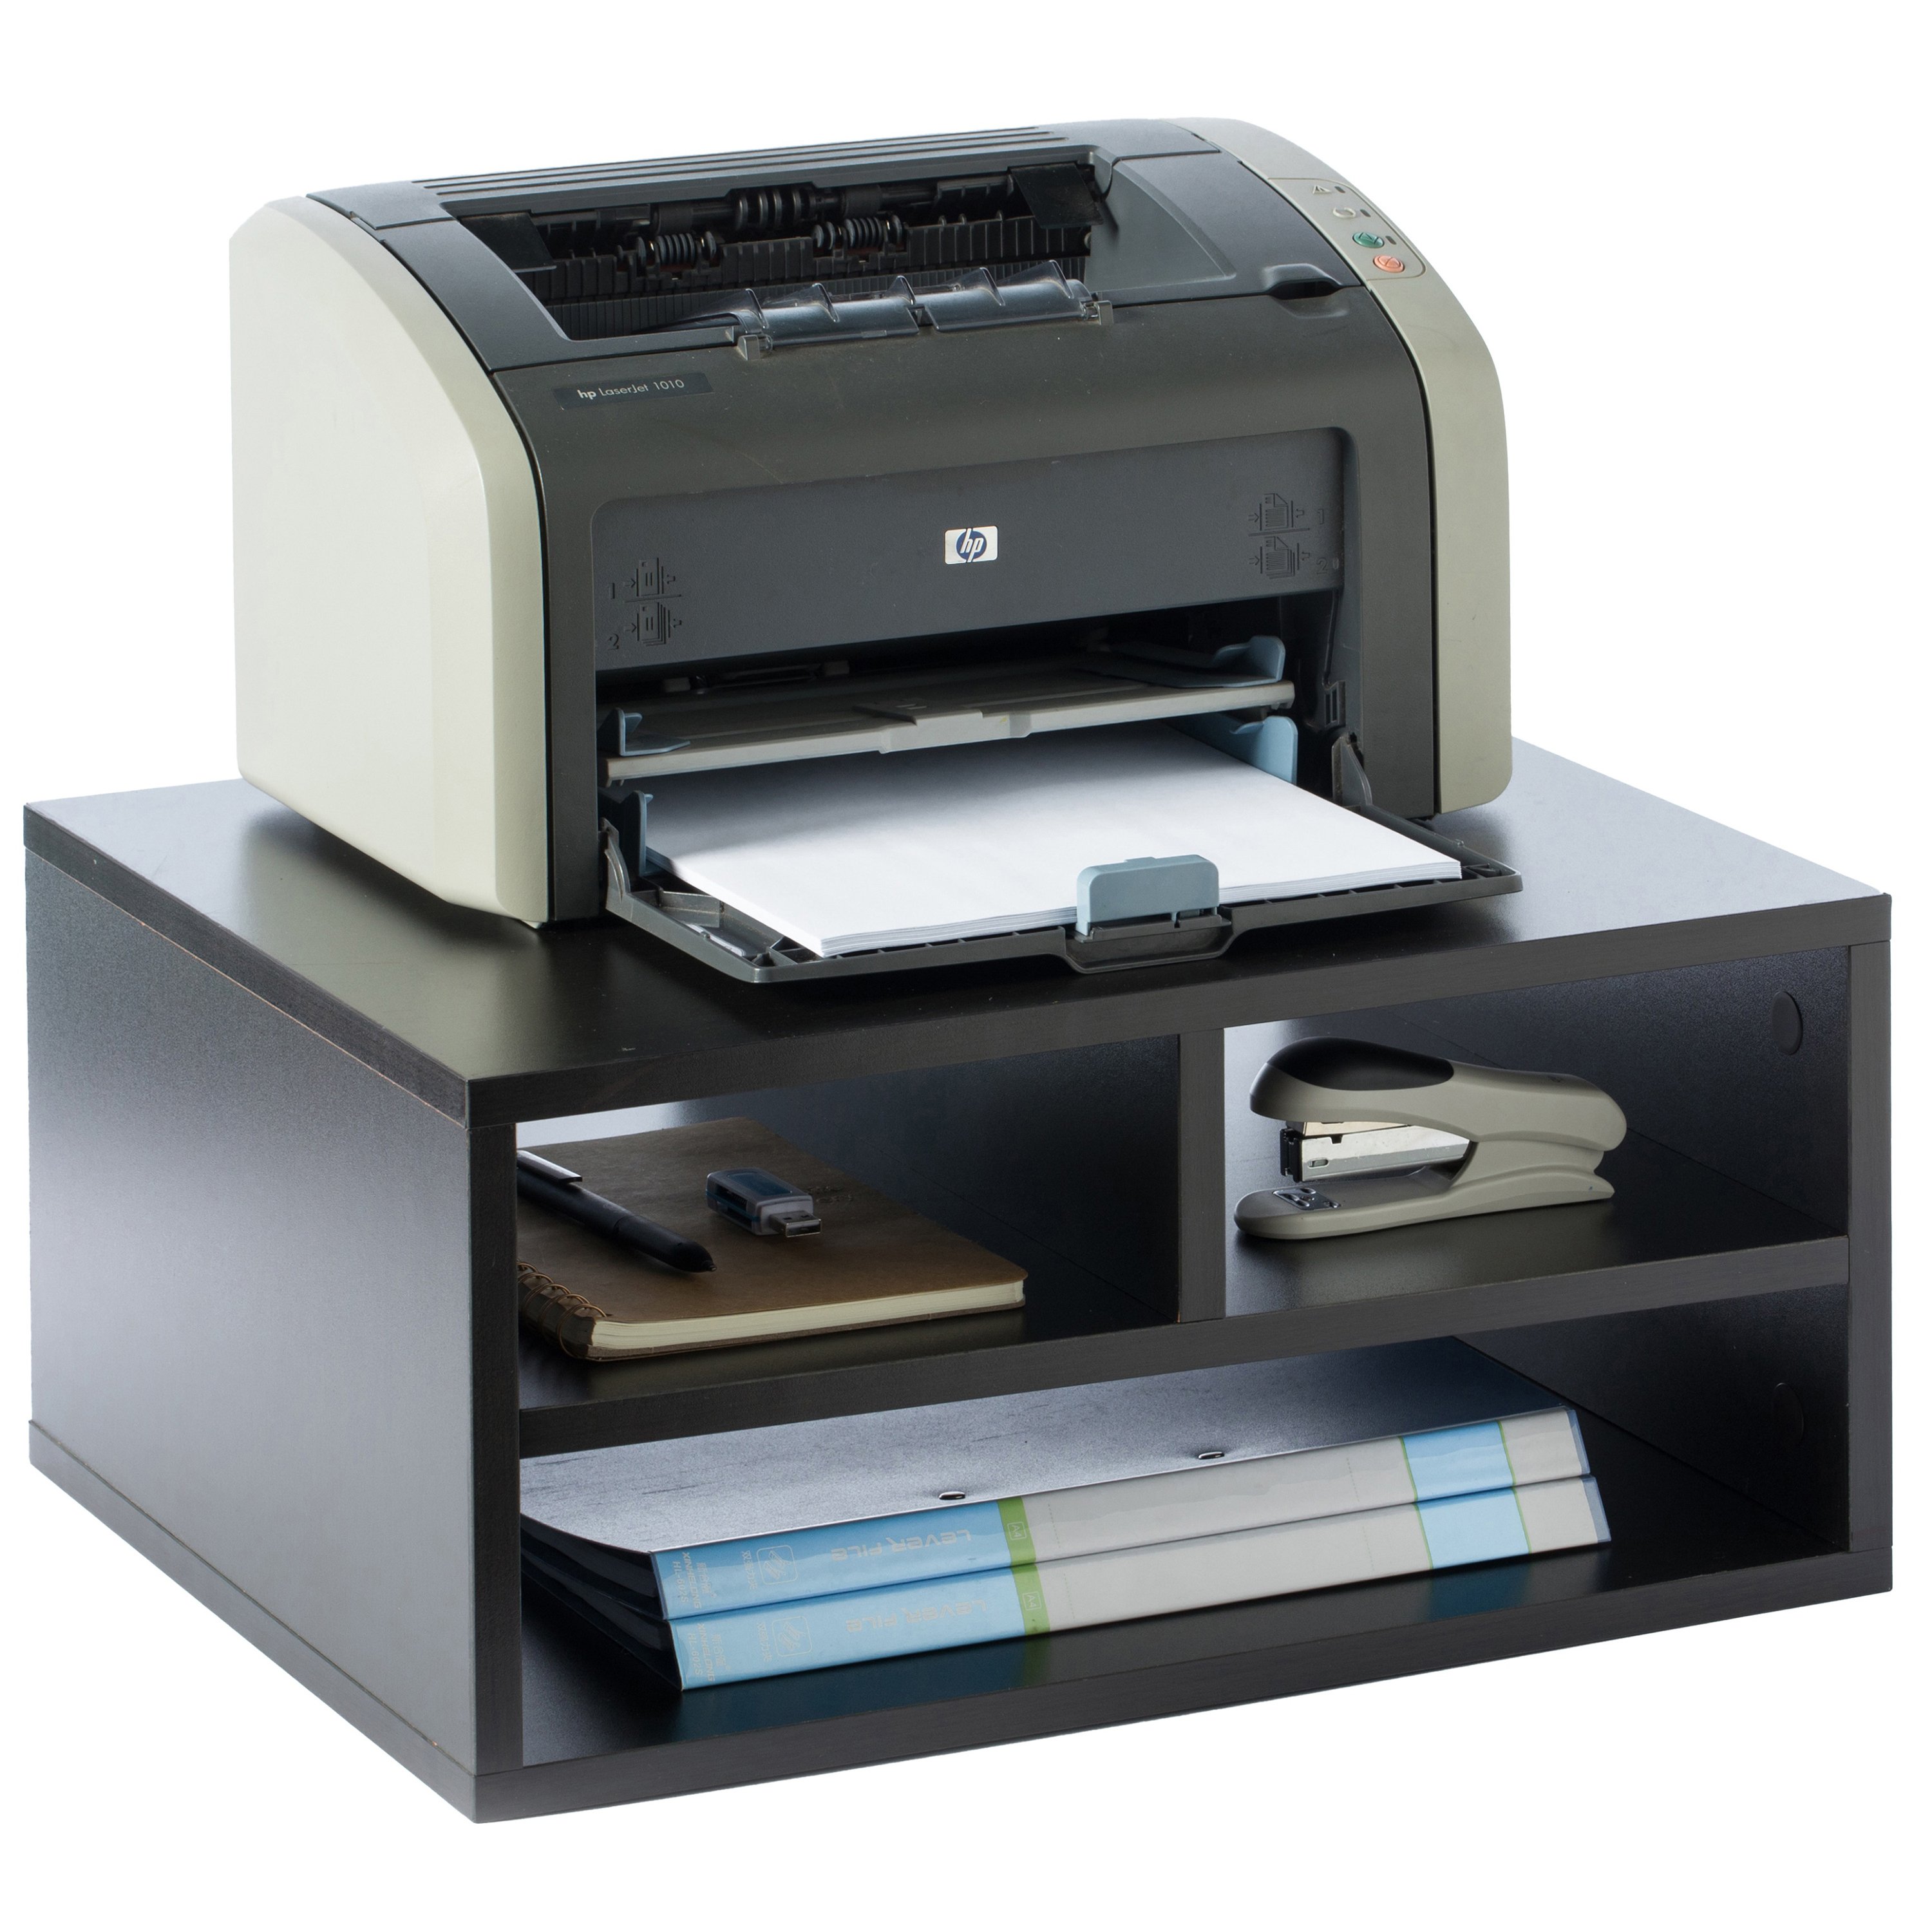 Printer Stand Shelf Wood Office Desktop Compartment Organizer - Black